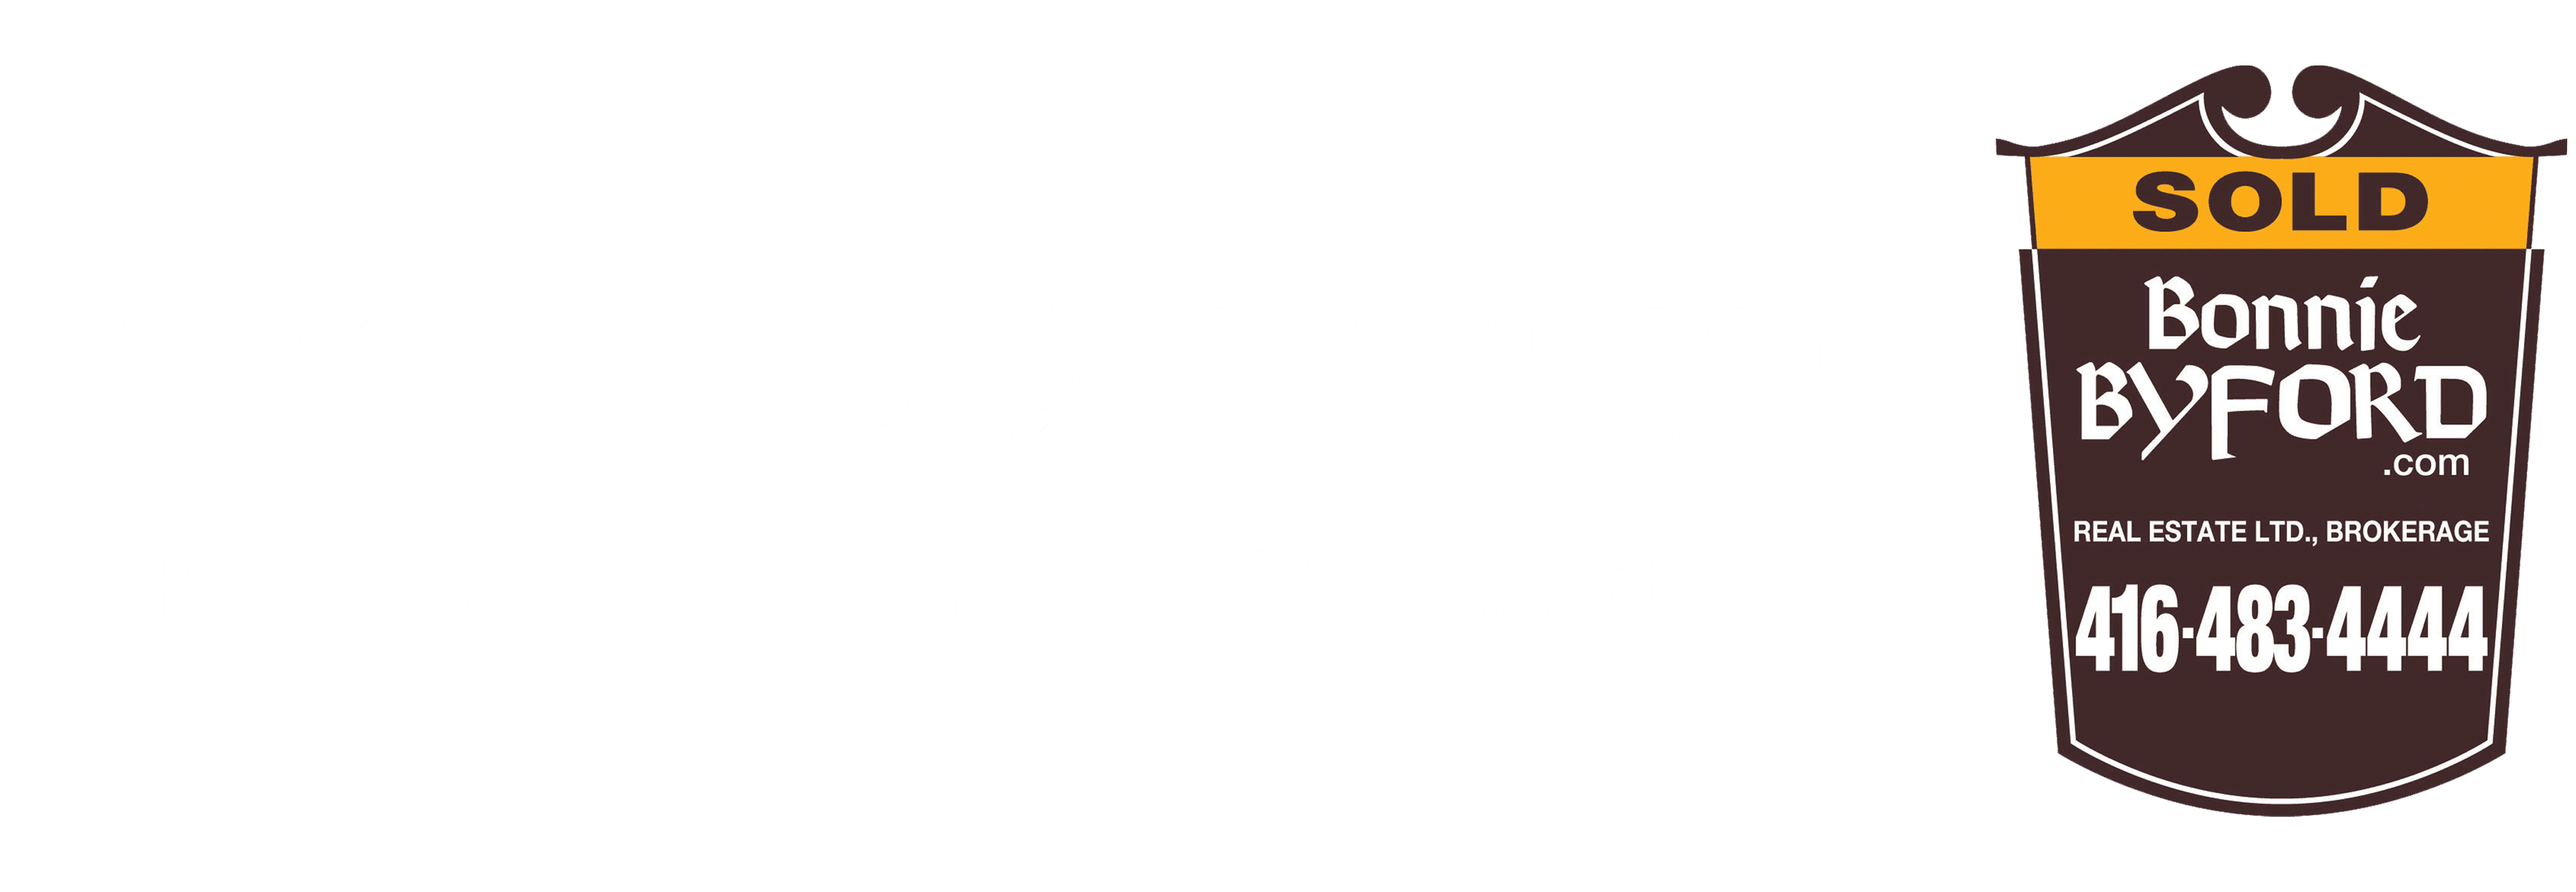 Bonnie Byford Real Estate Ltd. Brokerage